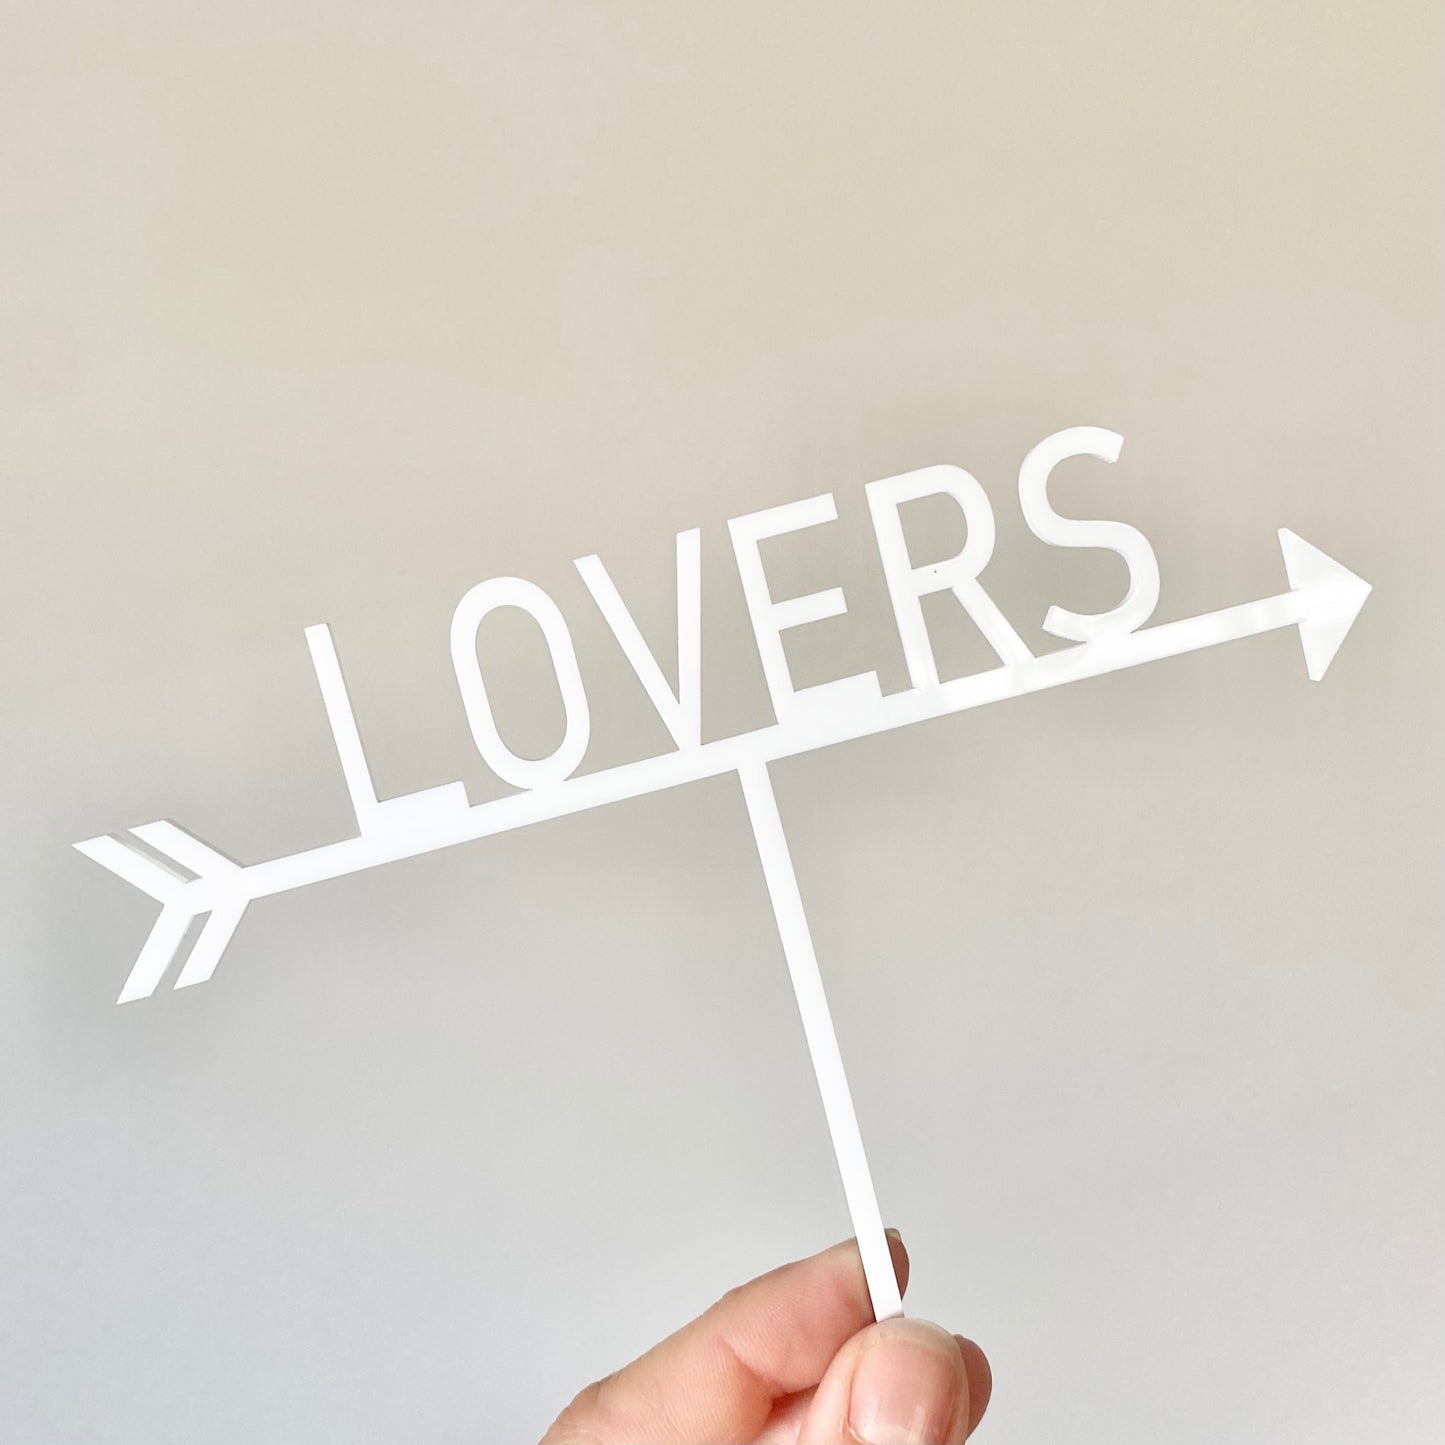 Lovers arrow